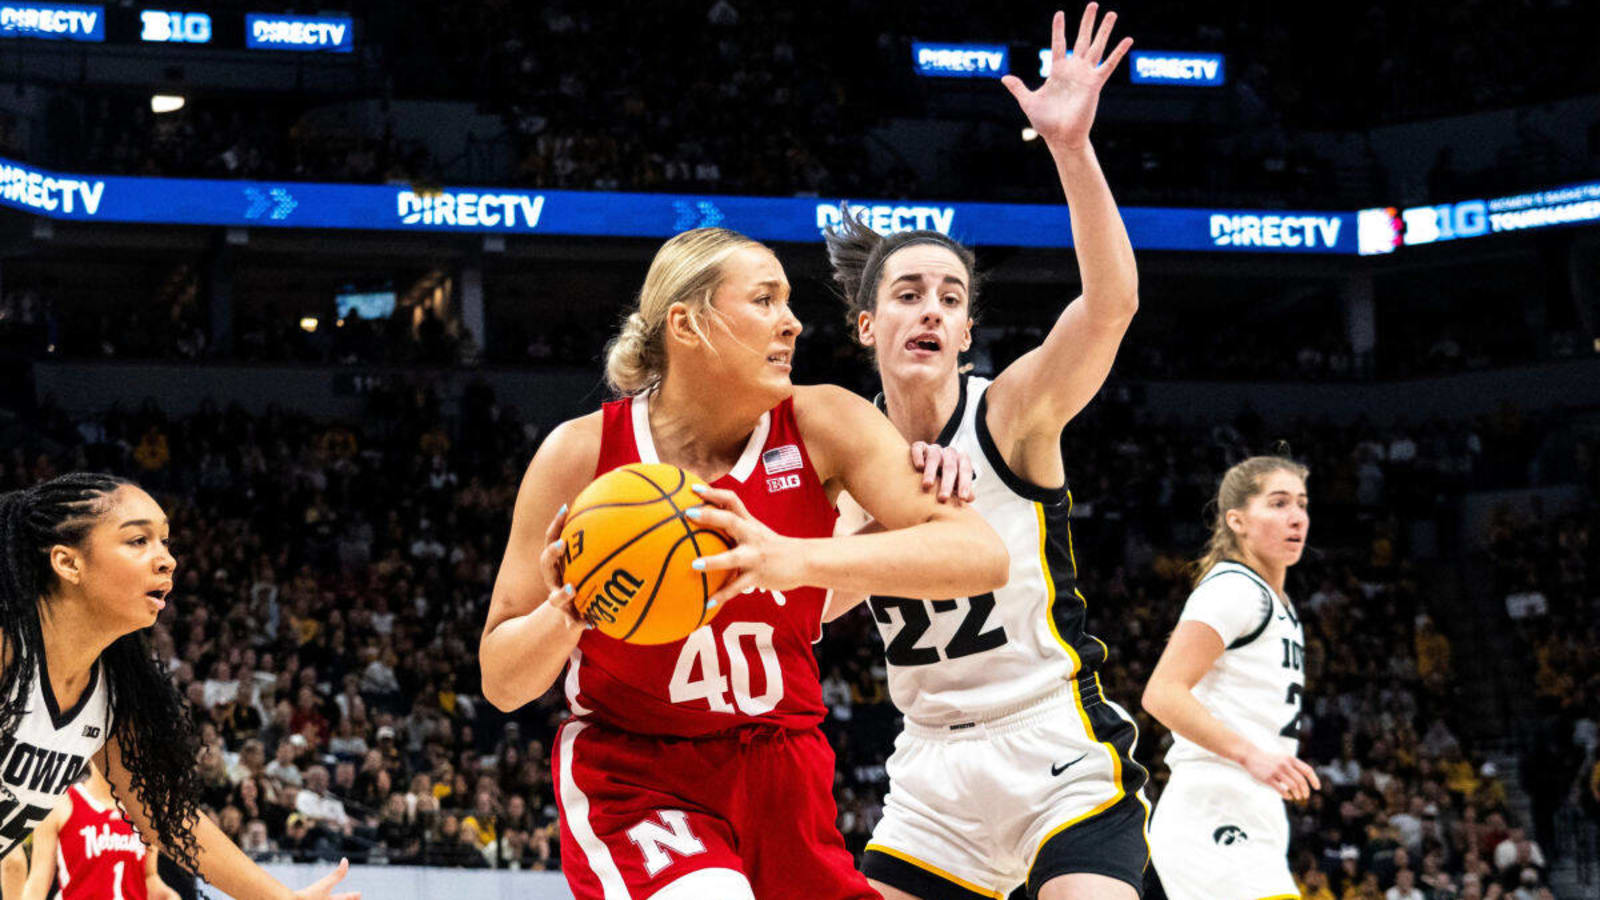 Nebraska Falls to Iowa in Big Ten Women's Basketball Tournament Finals